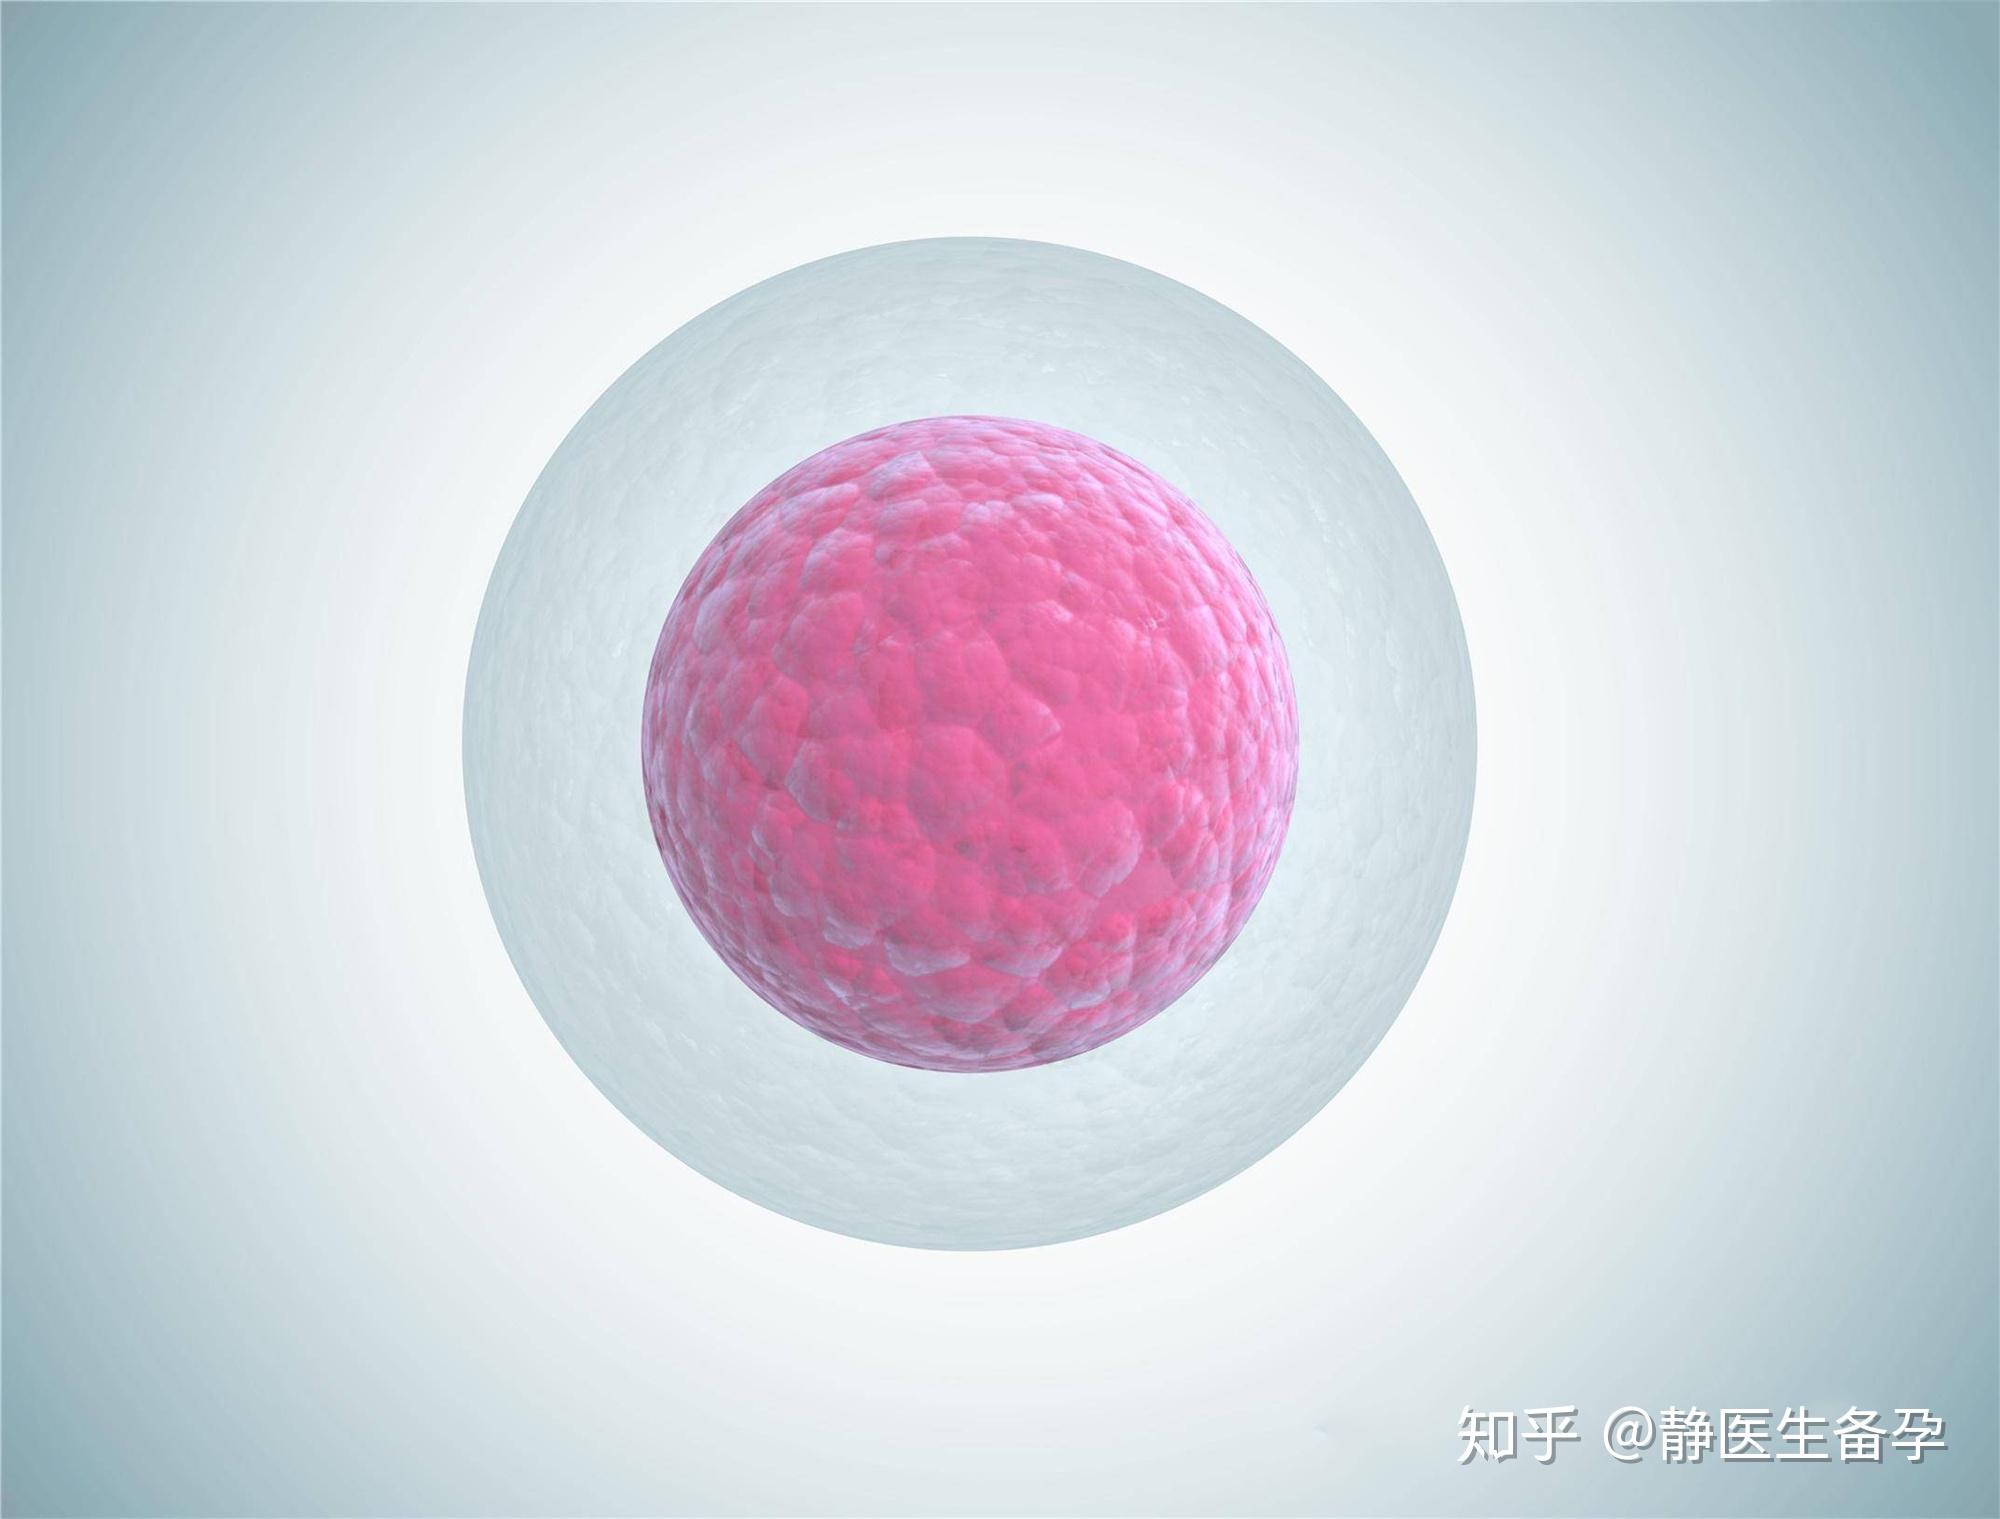 【组织胚胎学&原创手绘】卵泡生长&受精作用_哔哩哔哩 (゜-゜)つロ 干杯~-bilibili